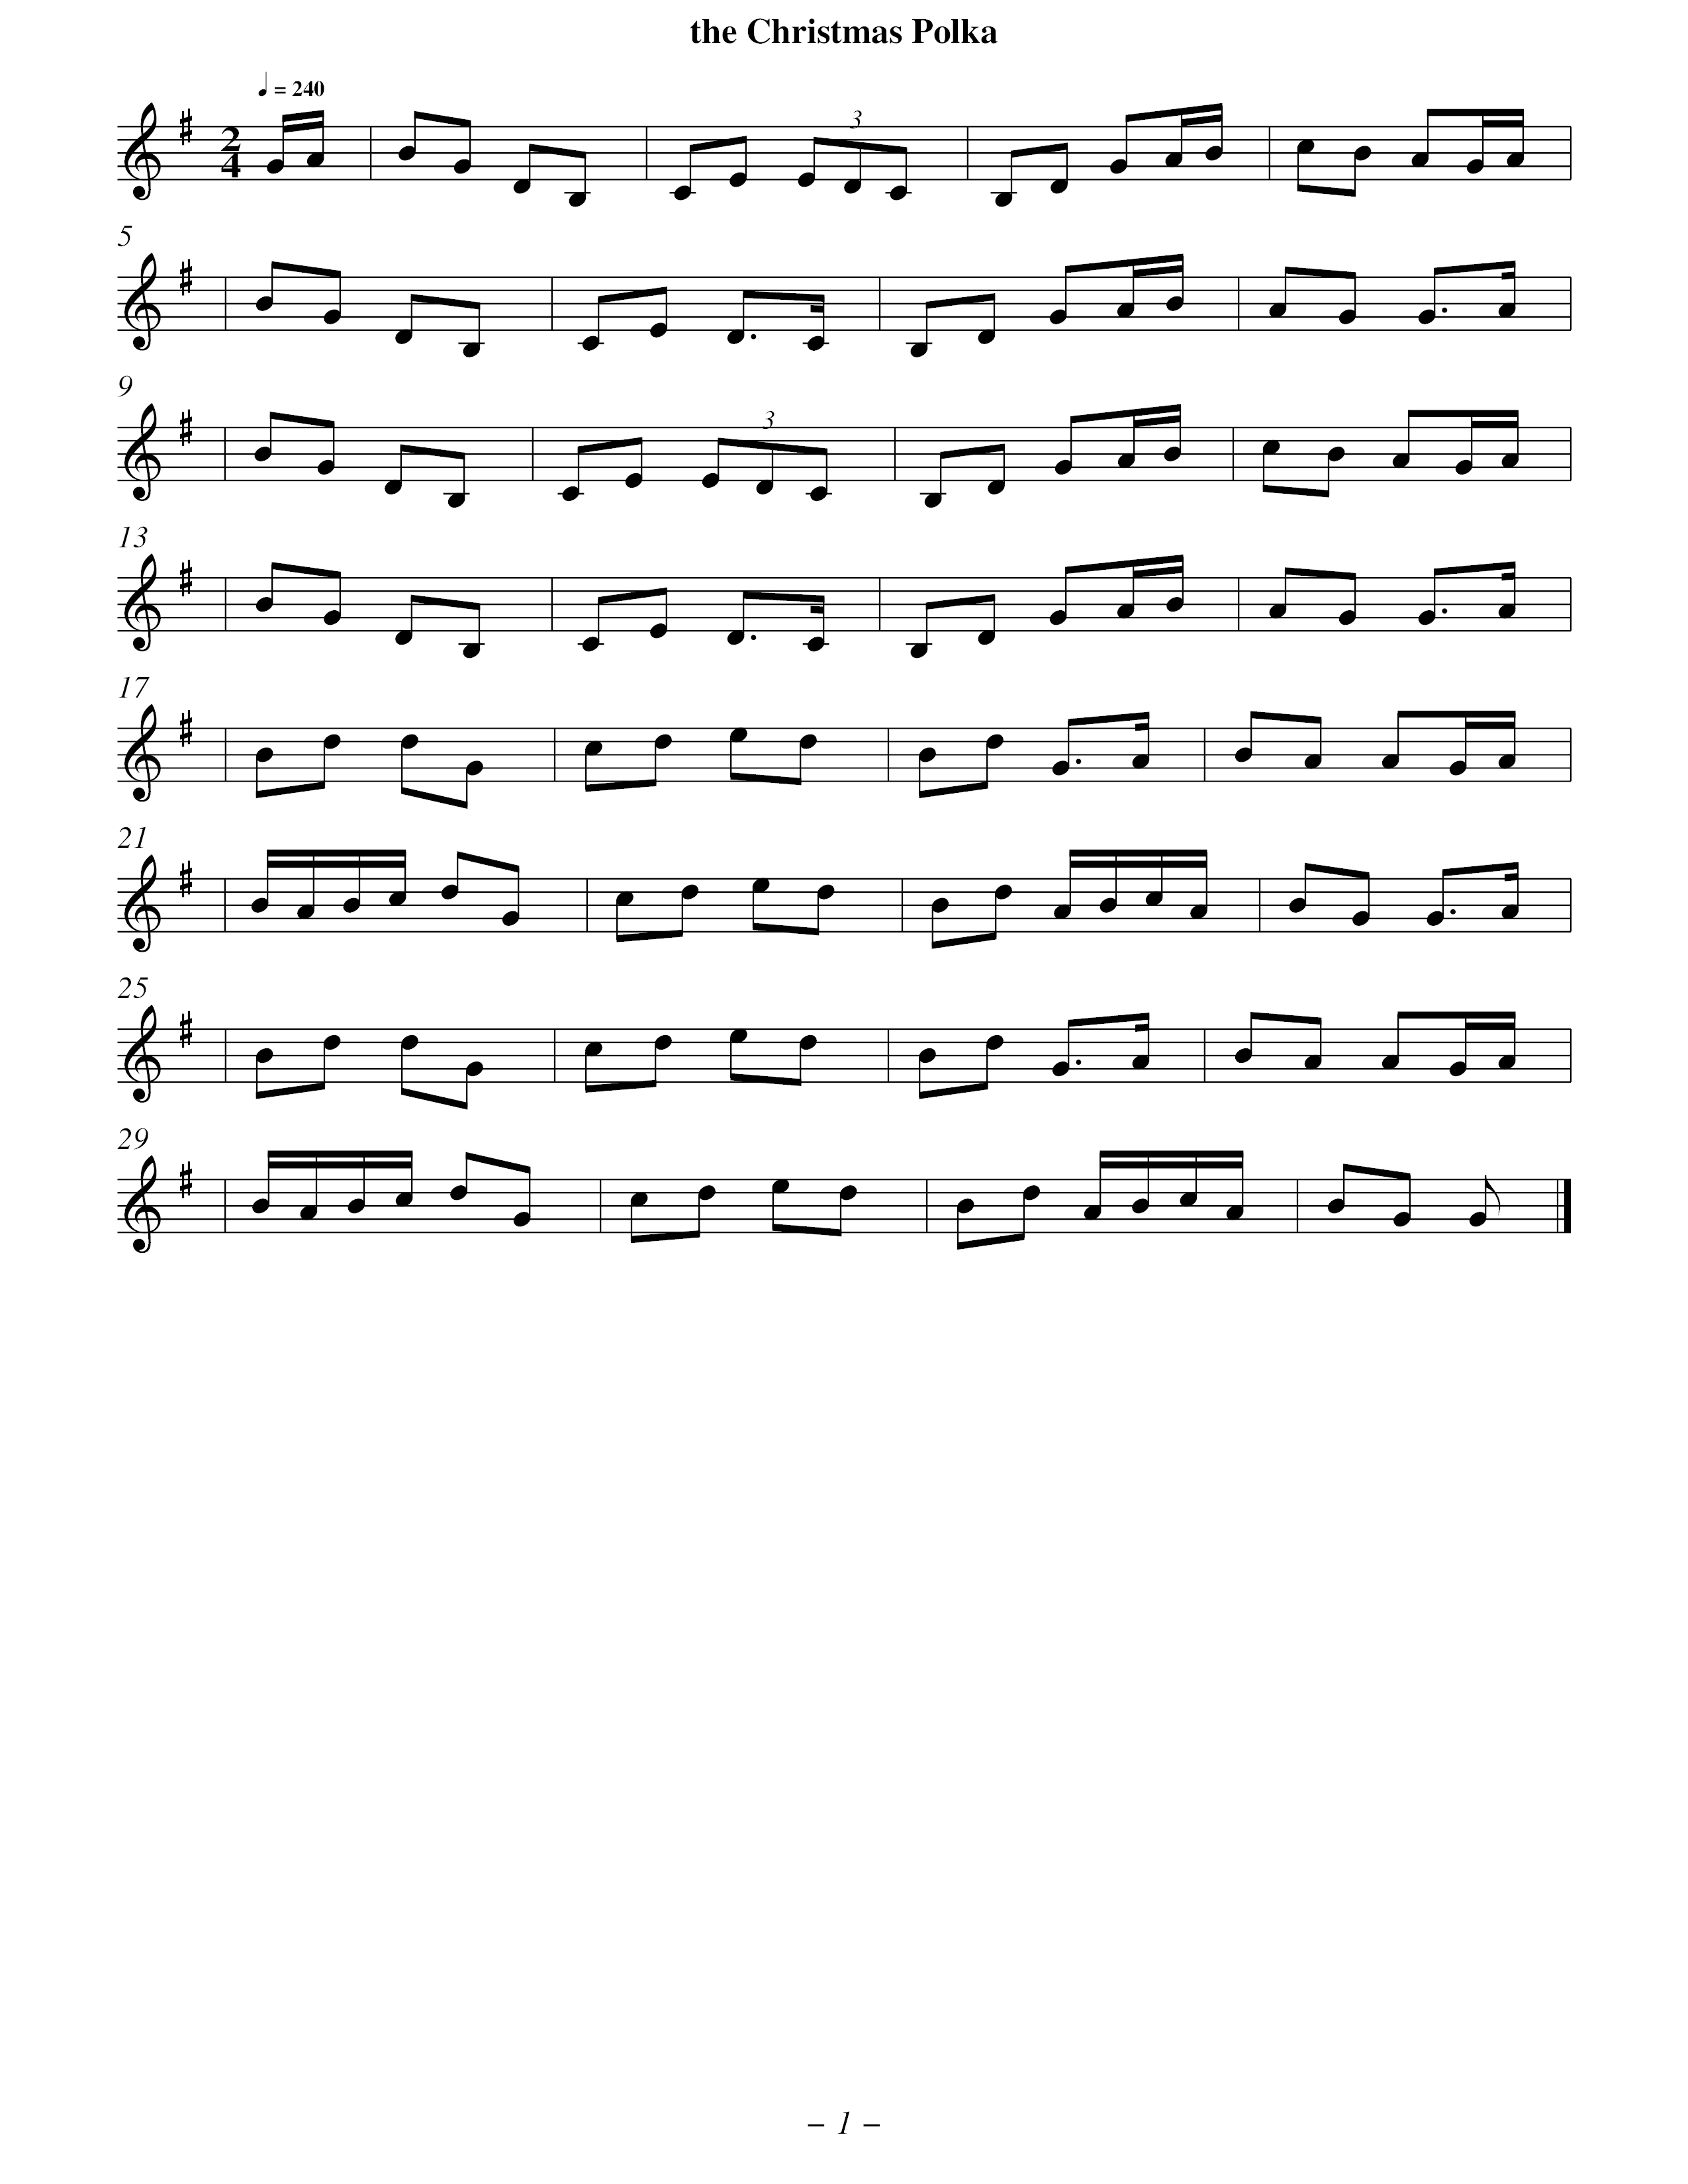 The Christmas Polka Score